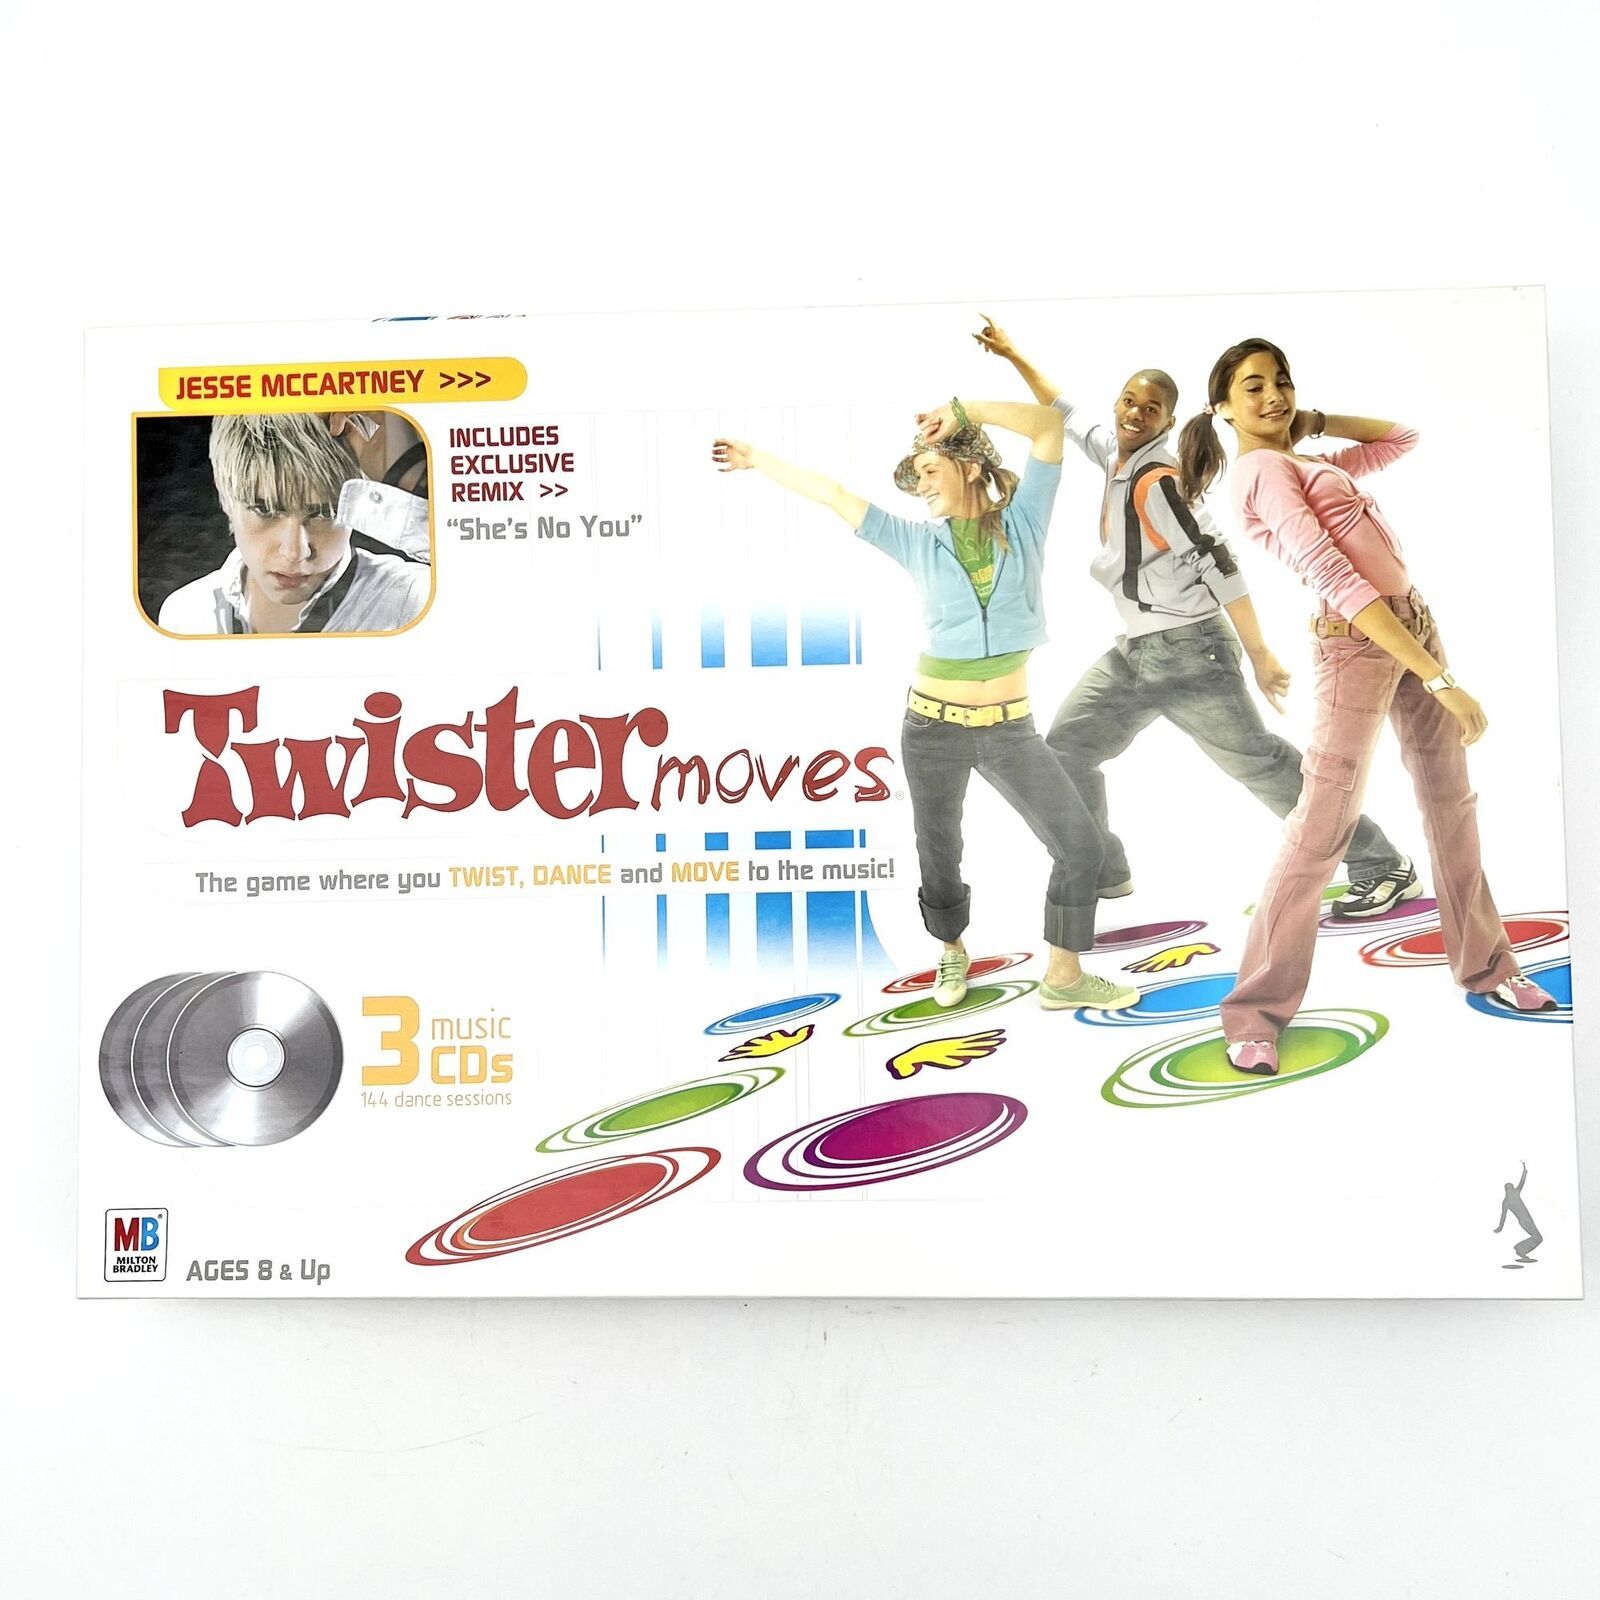 Milton Bradley Twister Moves With 3 CDs Jesse McCartney Remix "She's No You" - $18.81